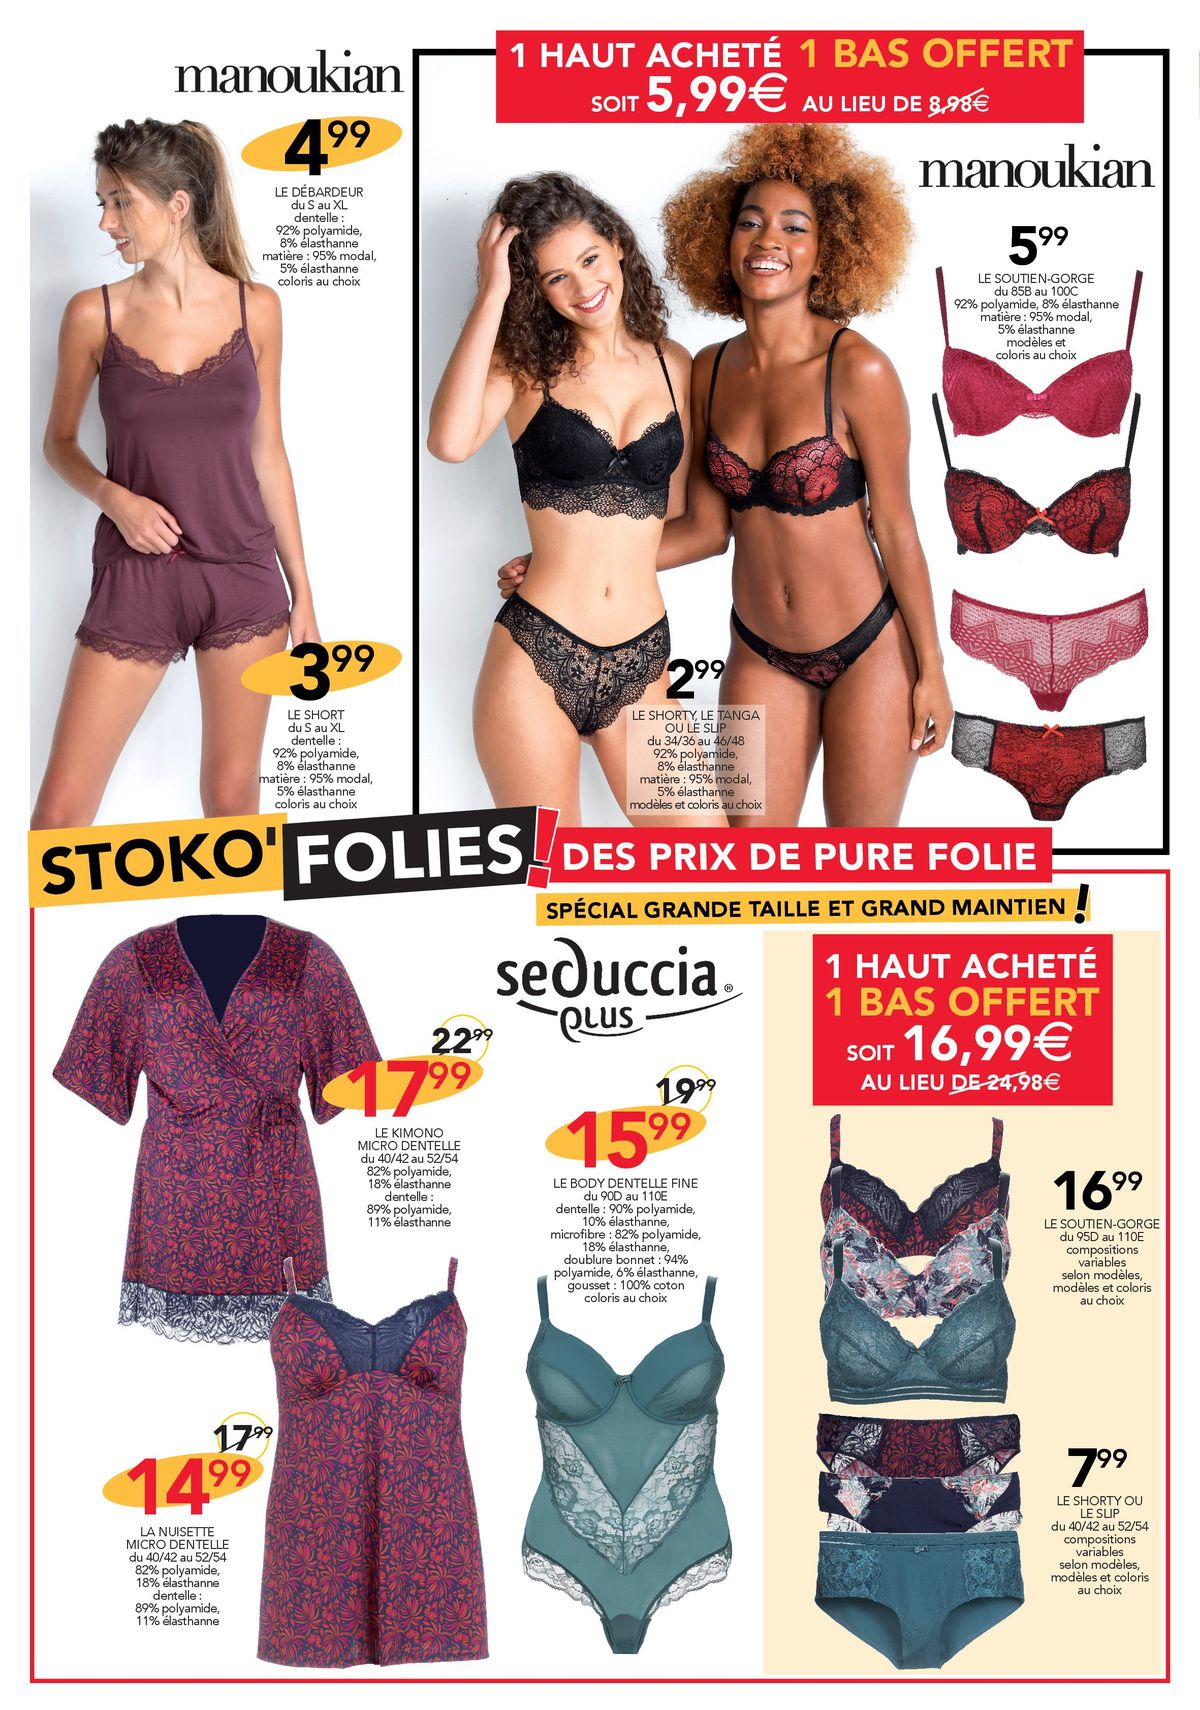 Catalogue STOKO'FOLIES ! DES PRIX DE PURE FOLIE, page 00004